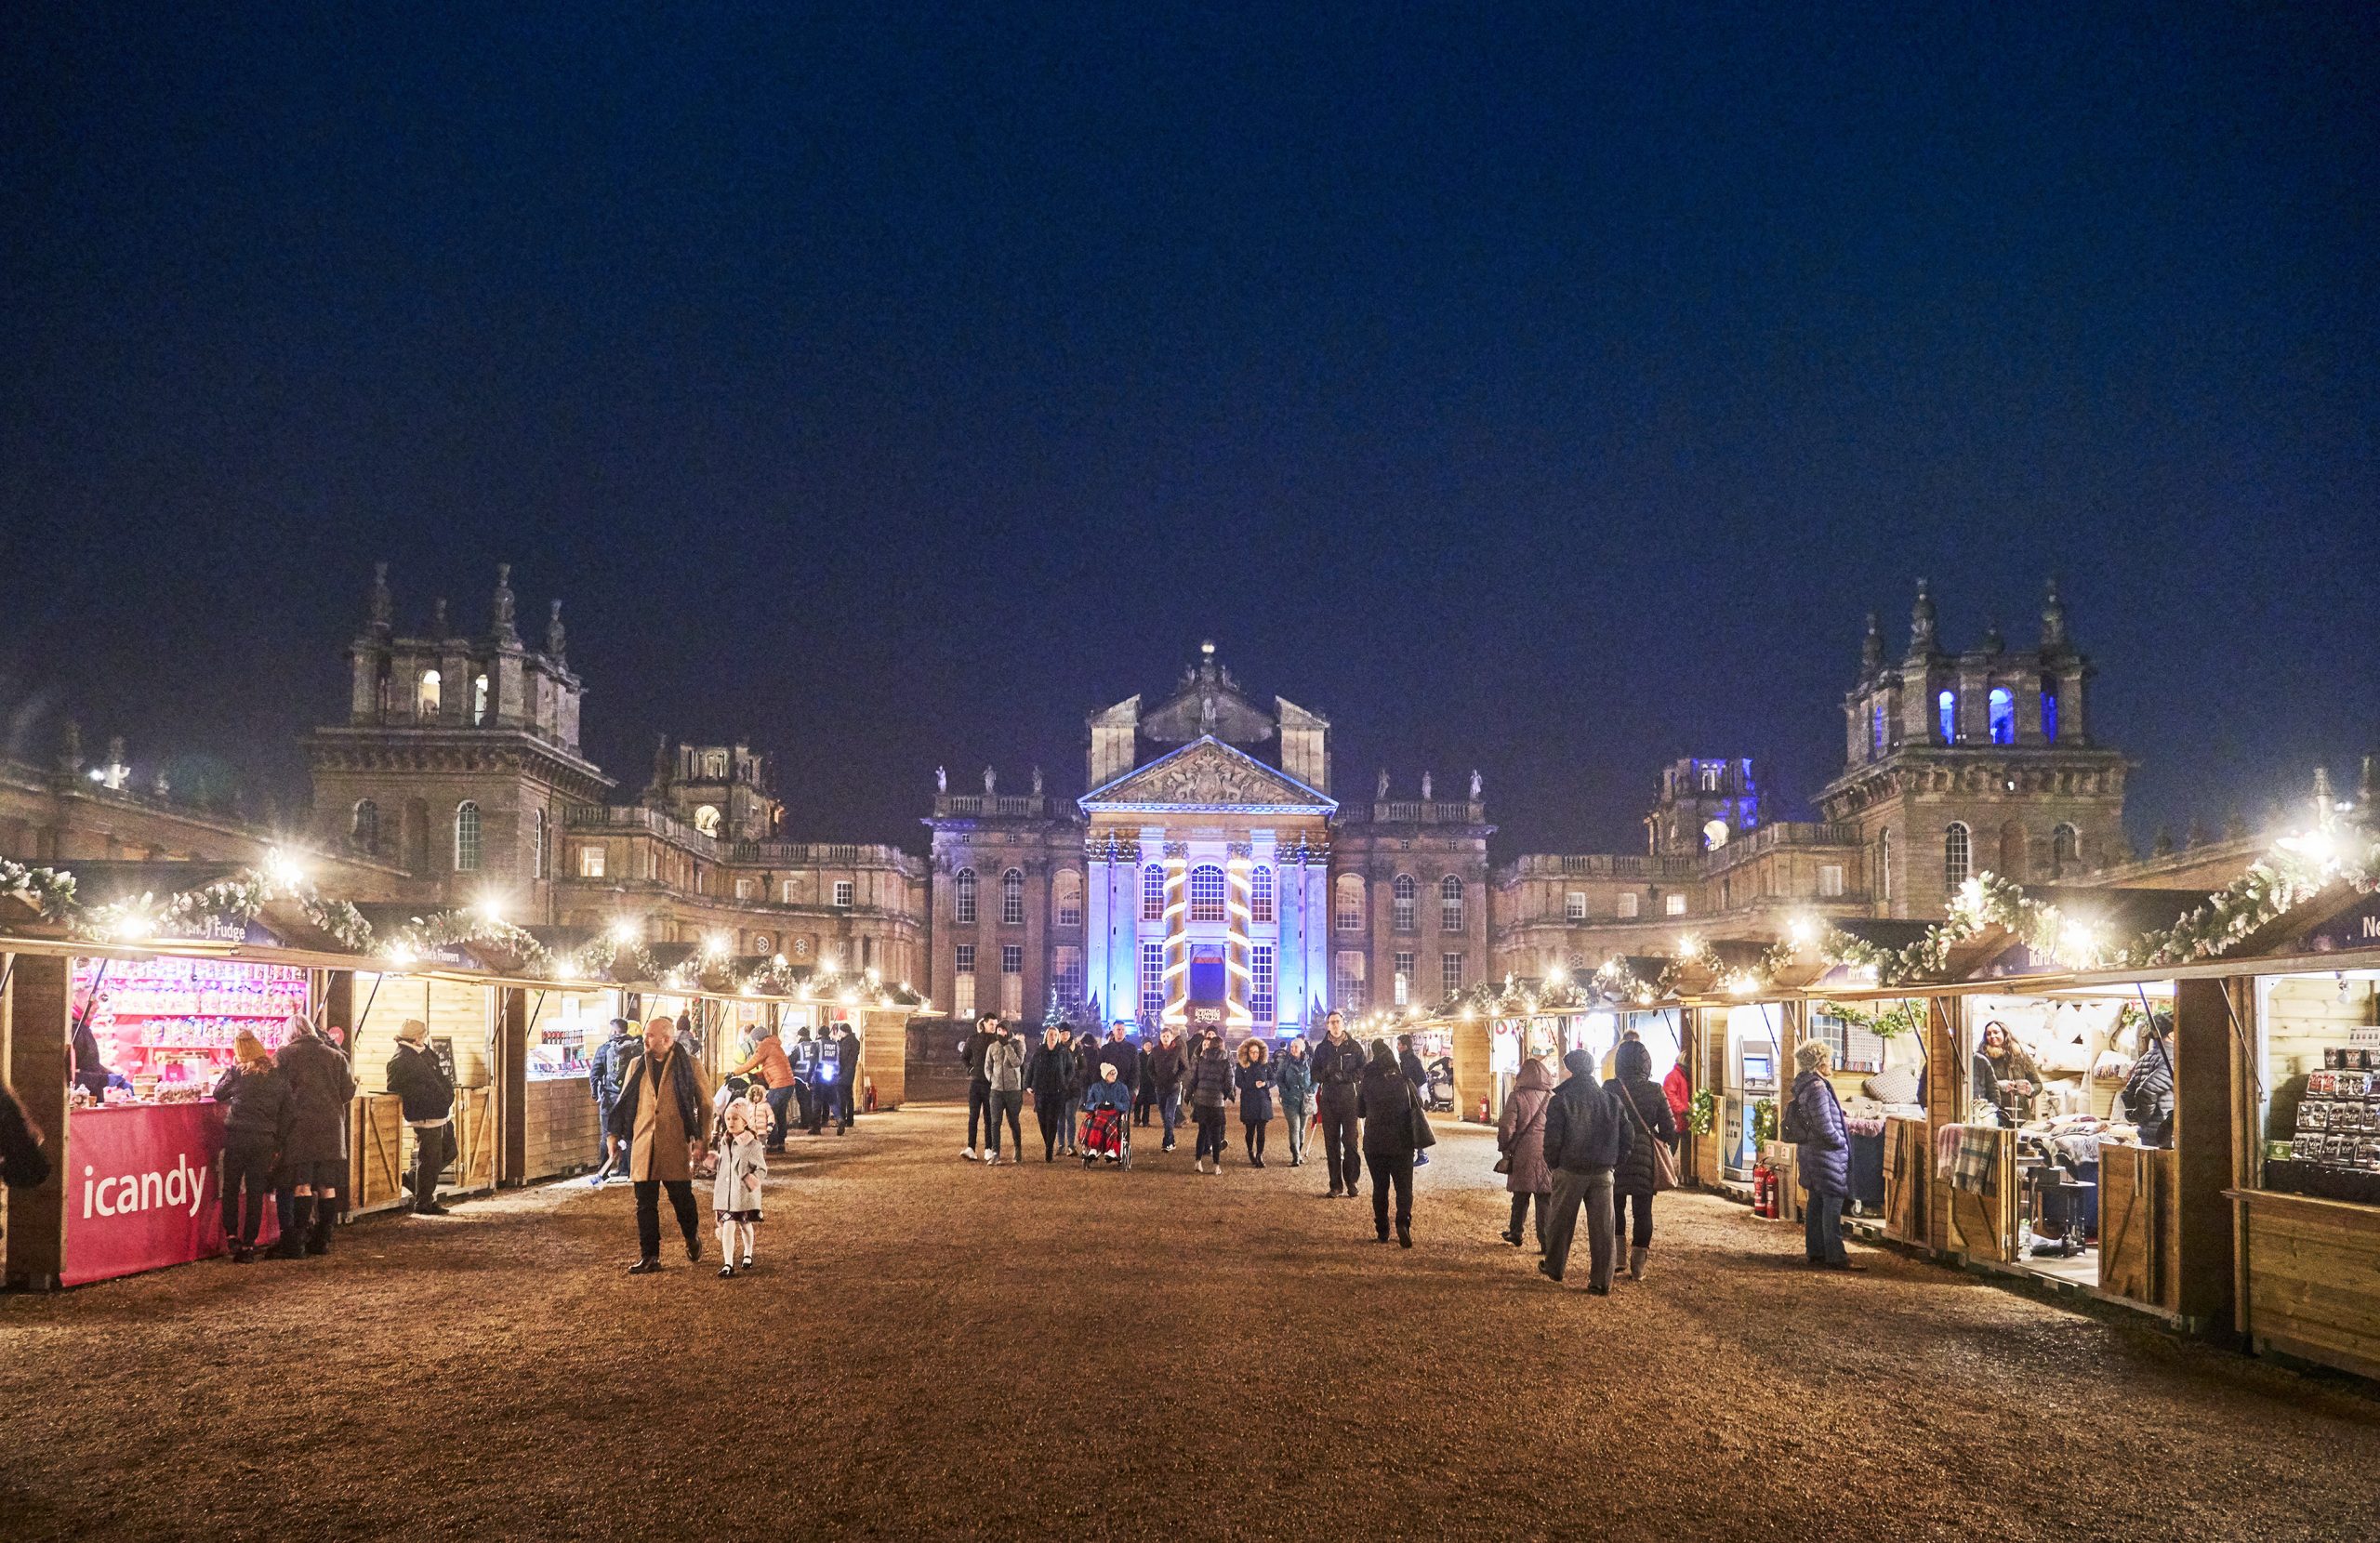 Crowds enjoy the Christmas market at Blenheim Palace